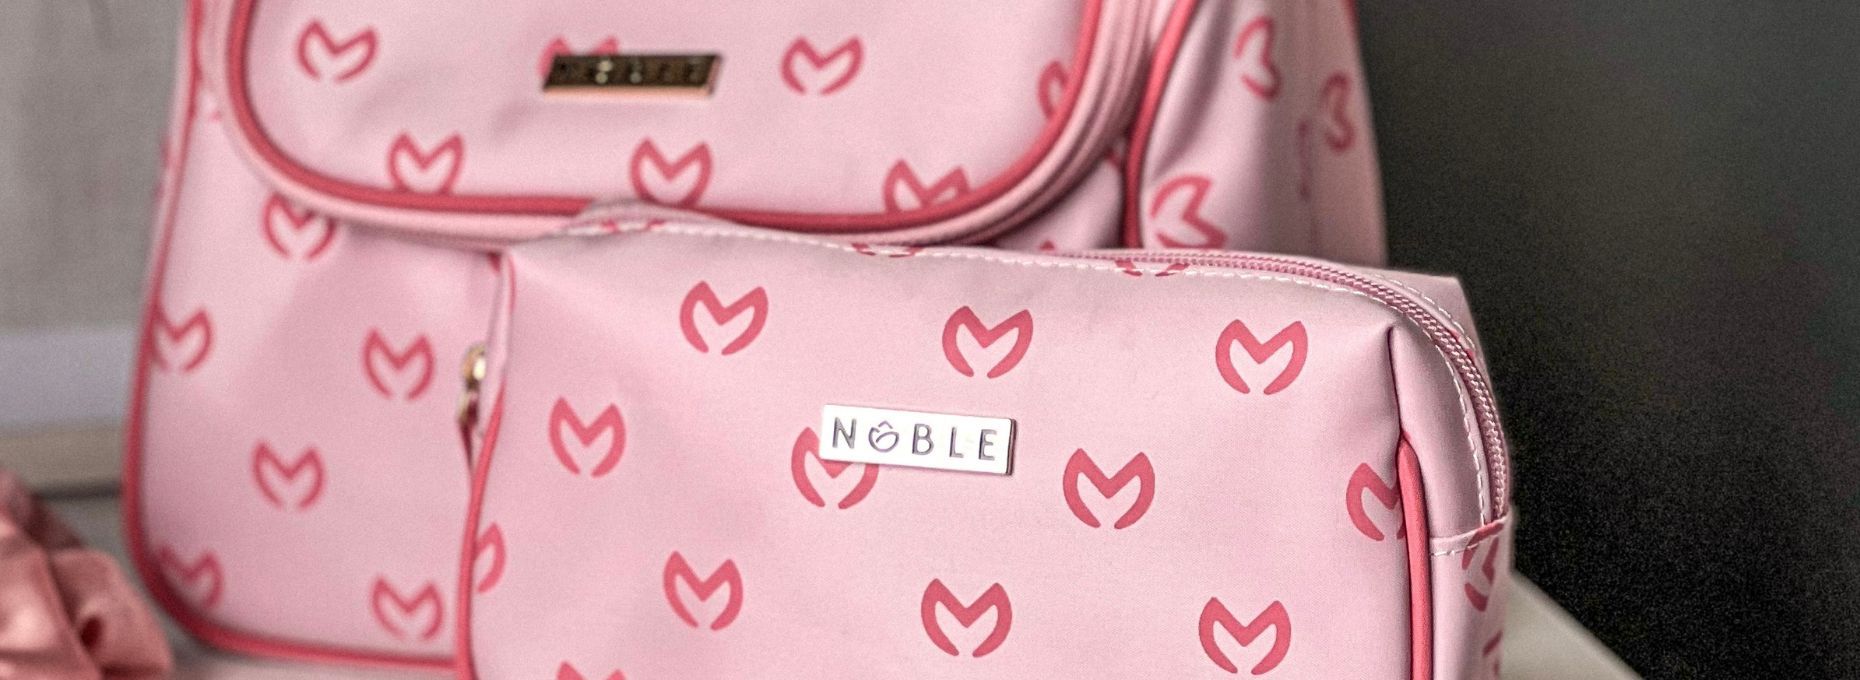 Kolekcja kosmetyczek Heart Noble